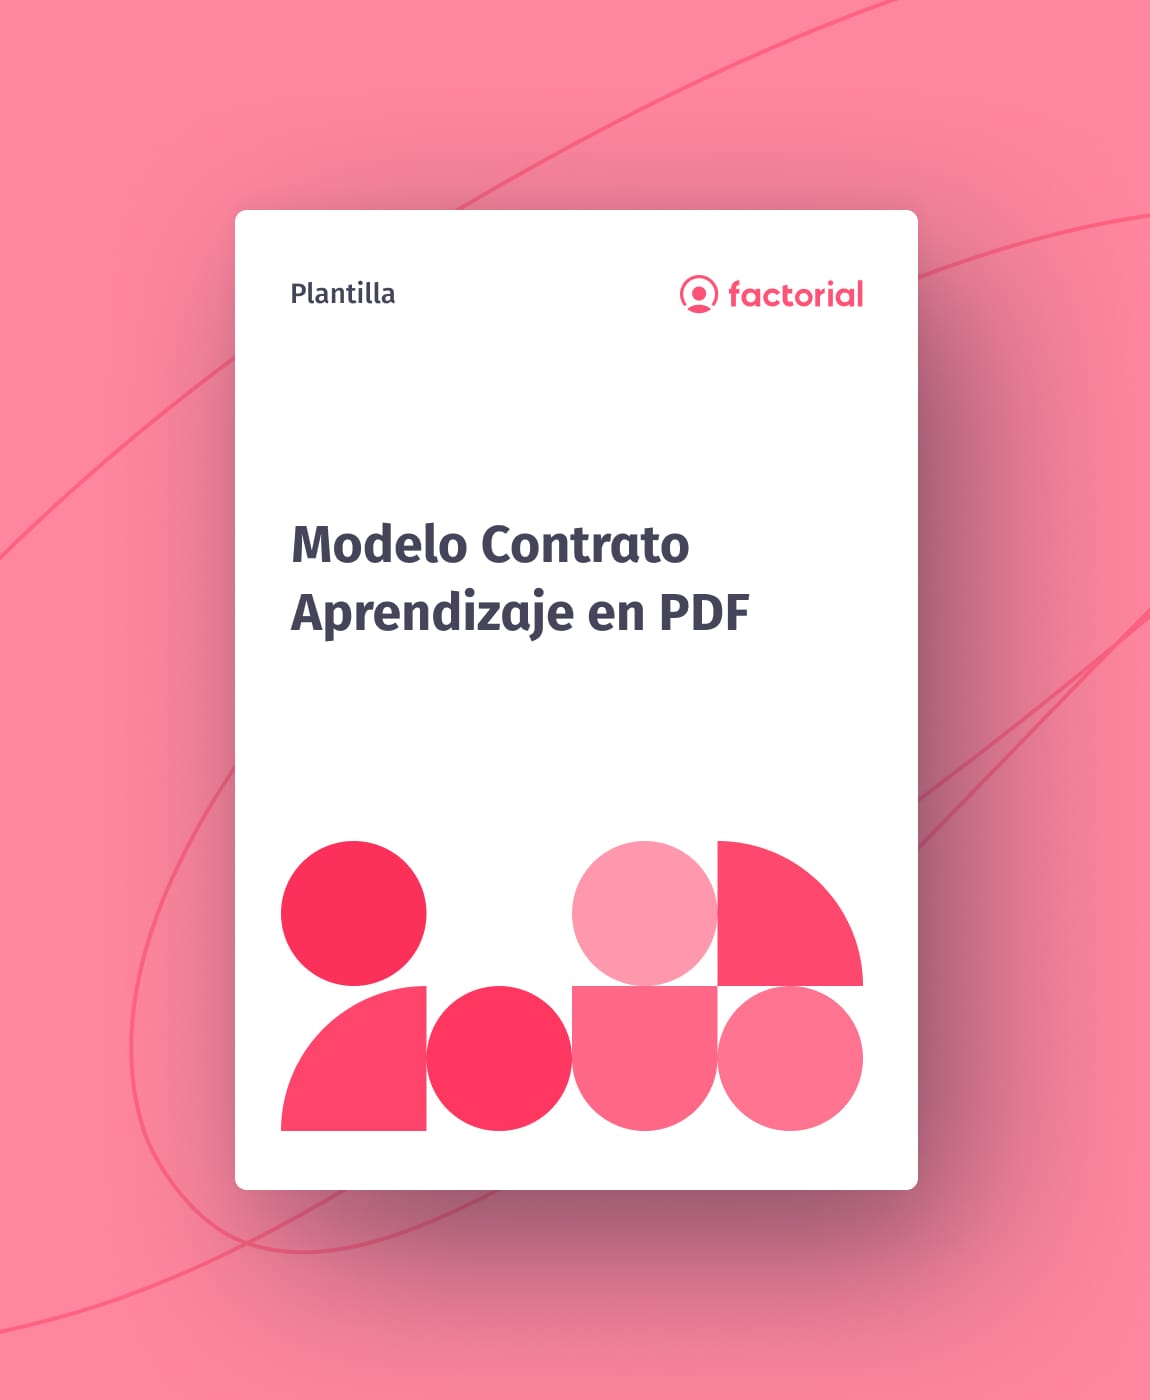 Modelo Contrato Aprendizaje en PDF